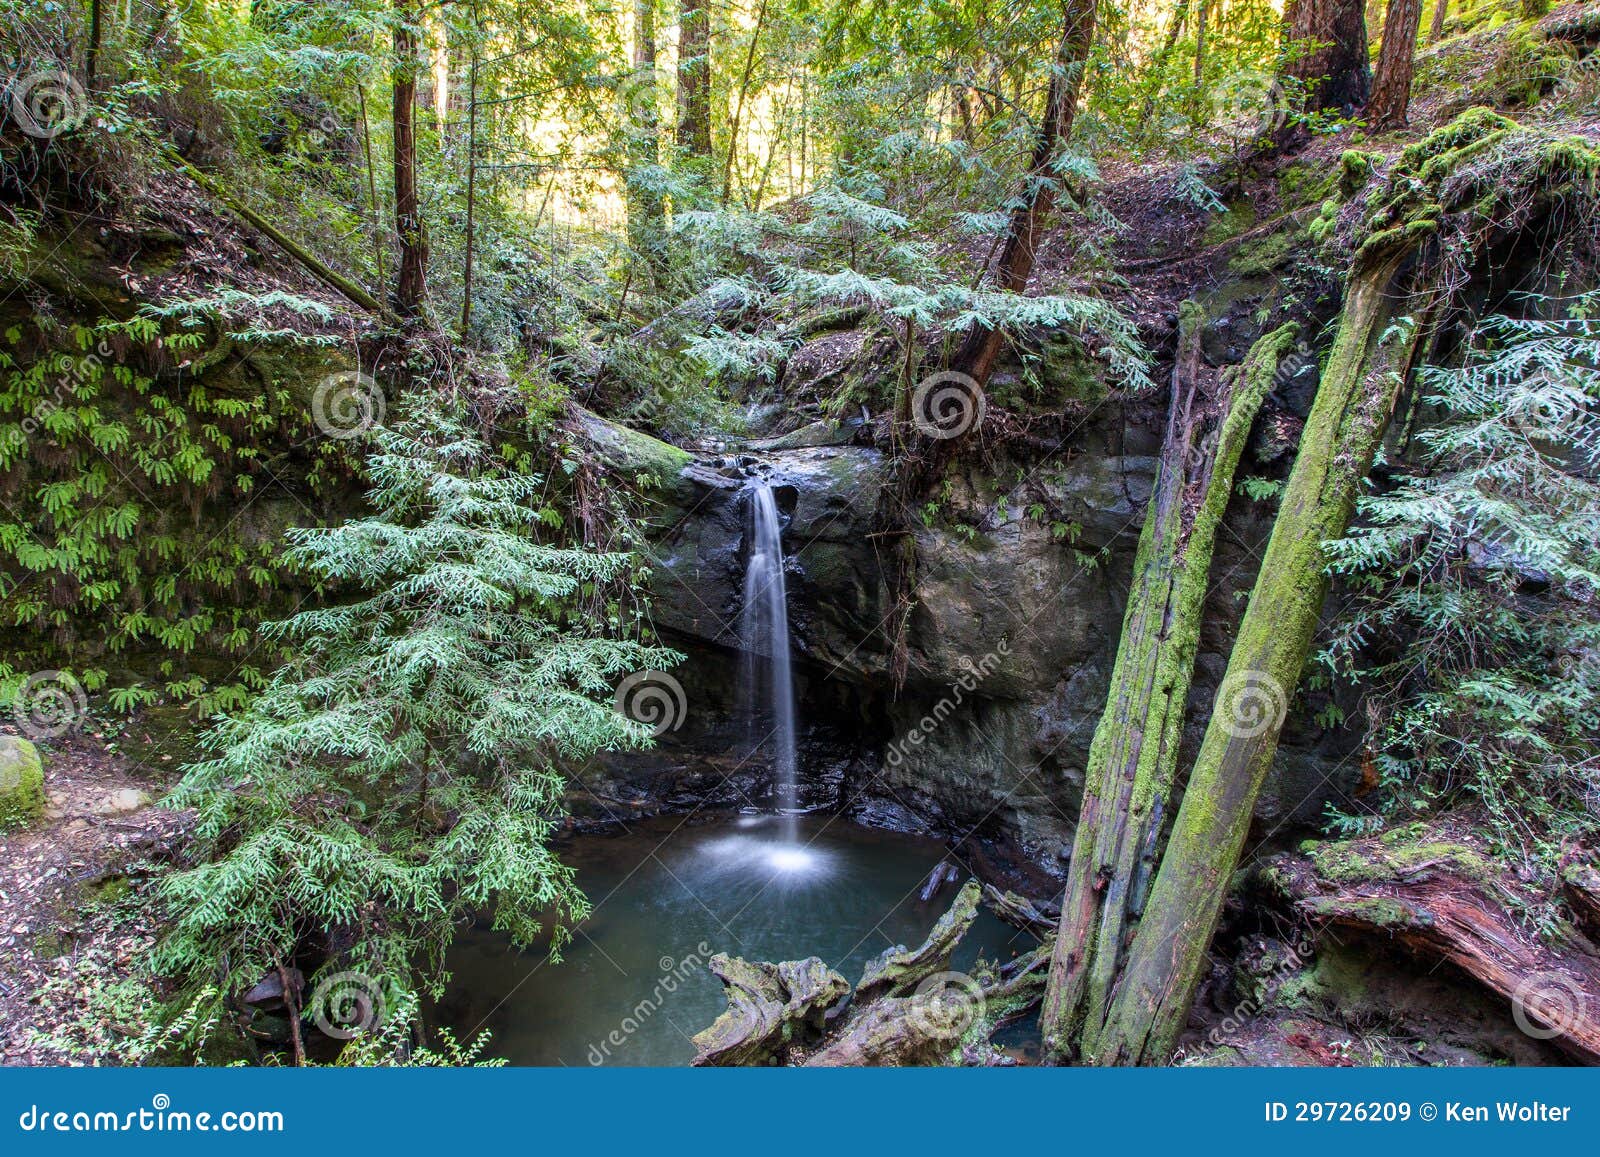 sempervirens falls in big basin redwoods state park, california